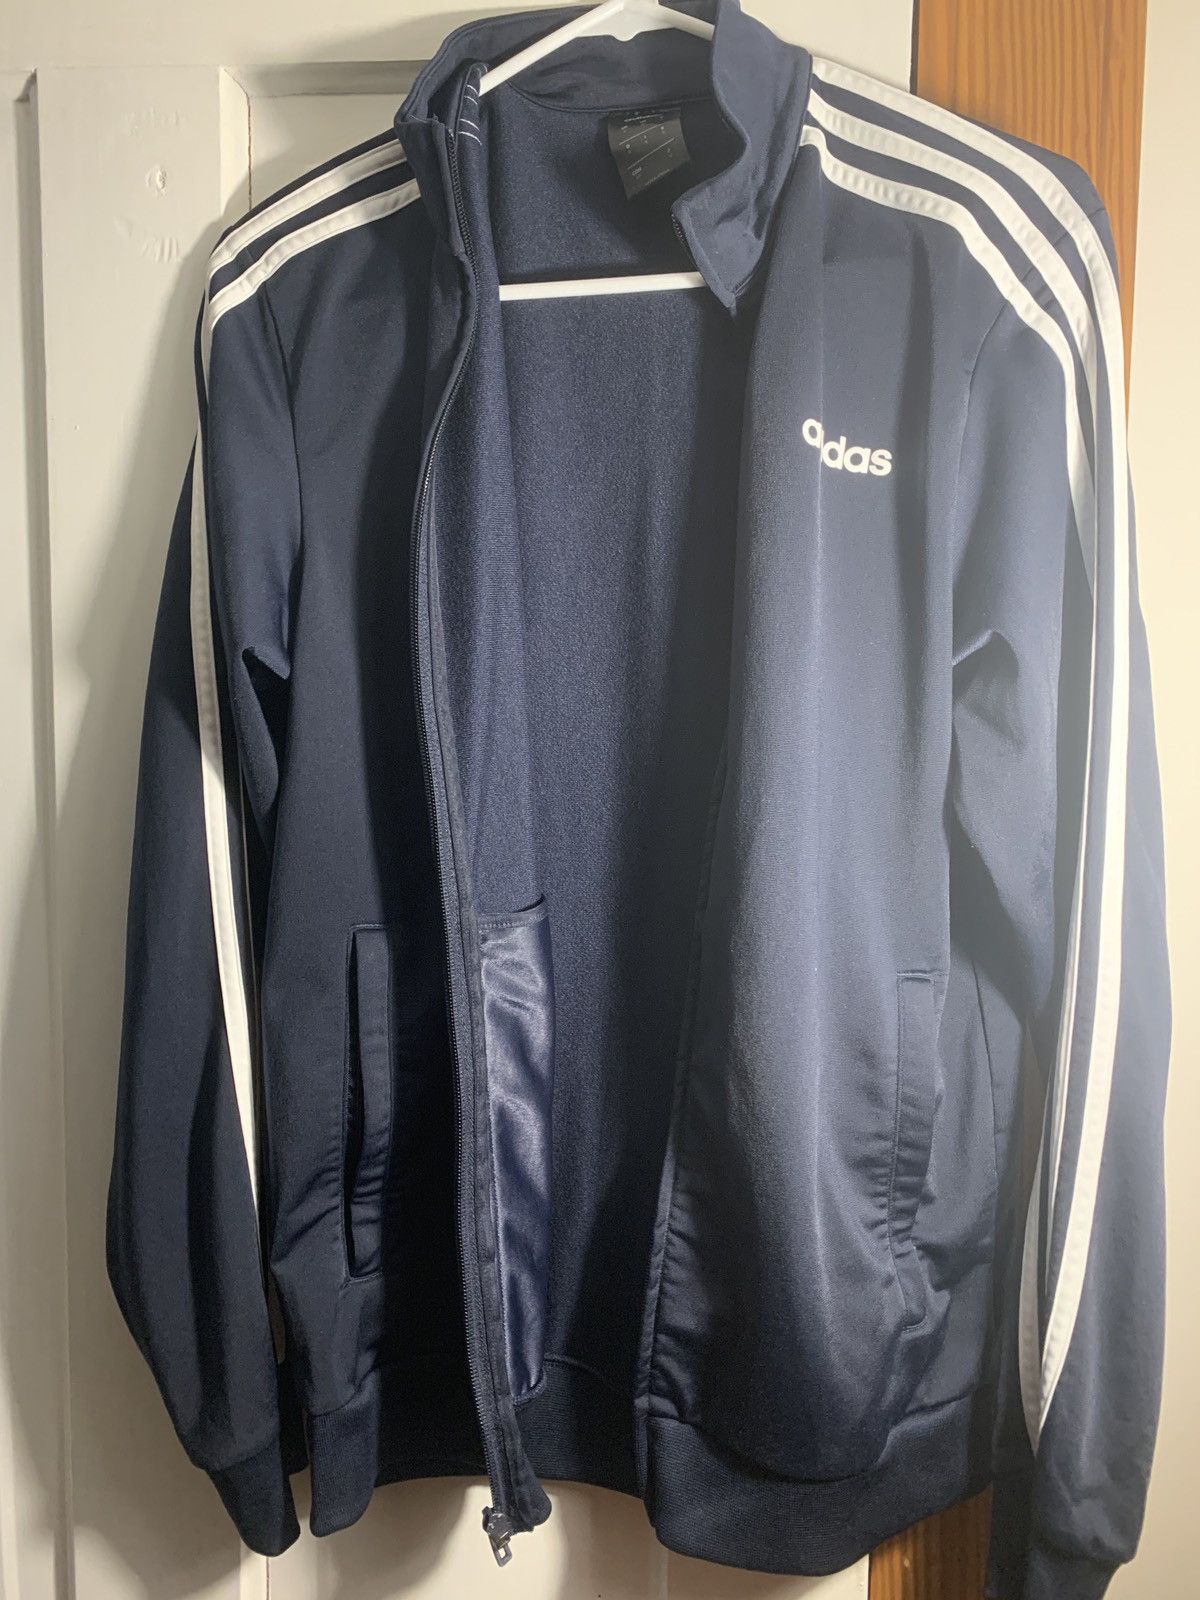 Adidas Adidas track jacket Size US S / EU 44-46 / 1 - 3 Thumbnail